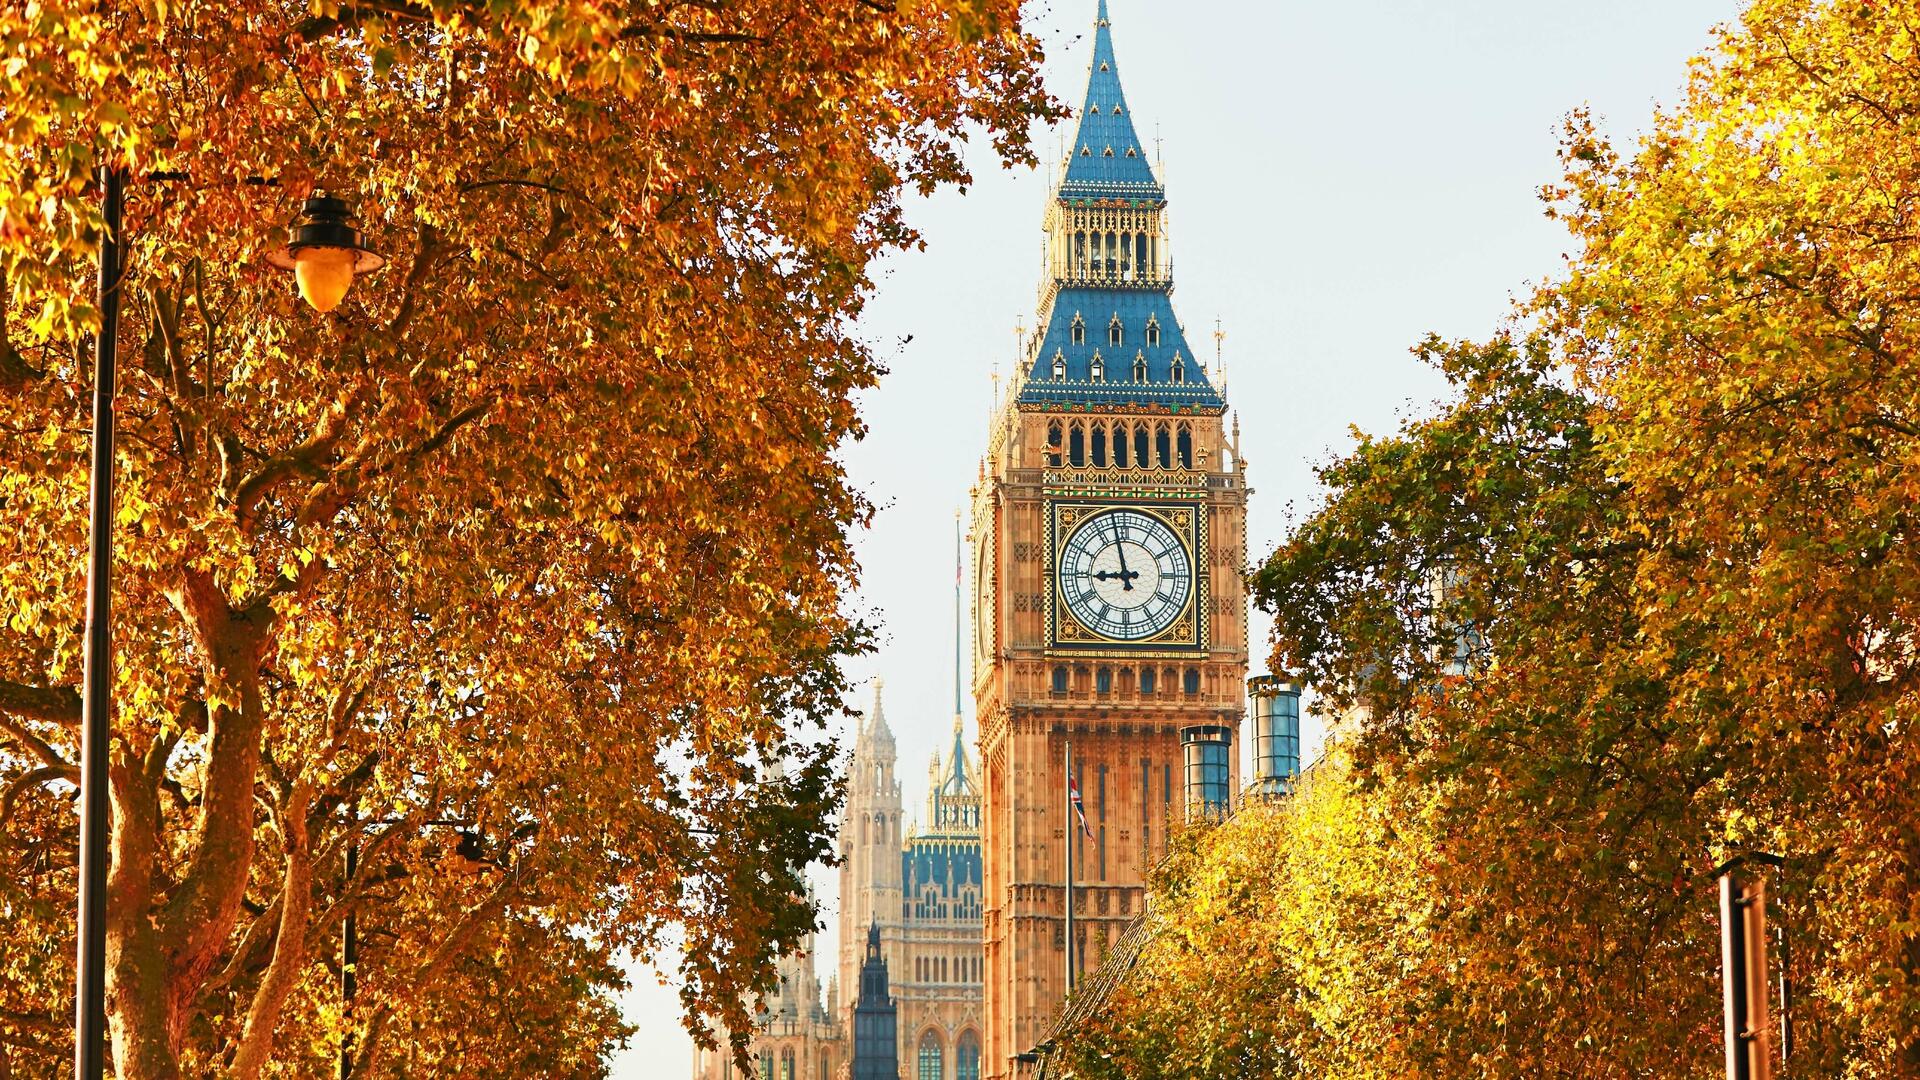 London in October Go City®